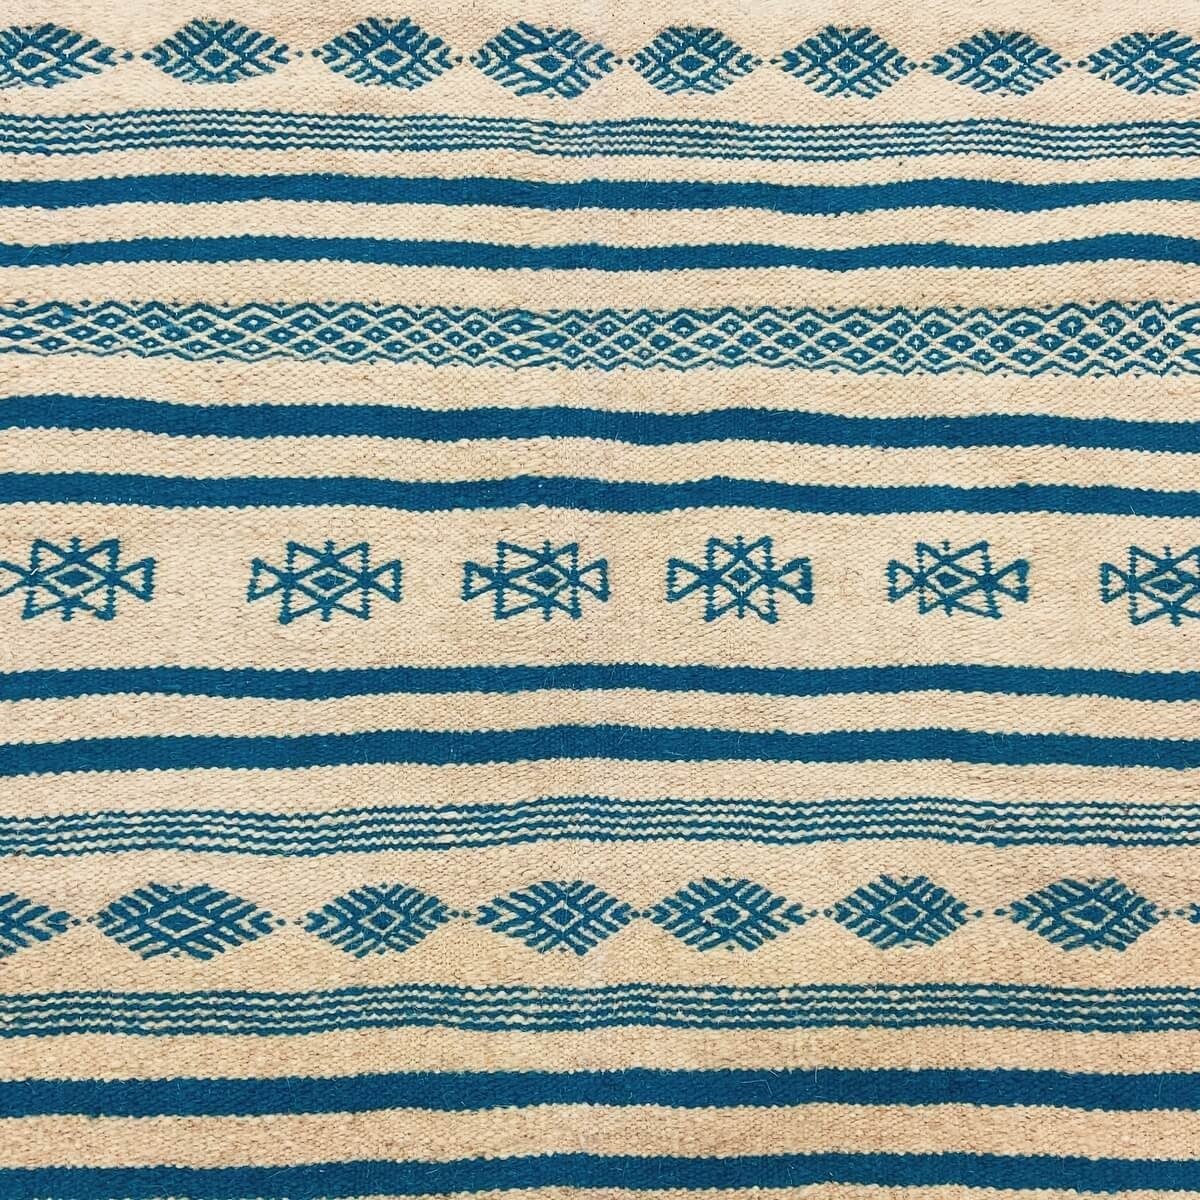 Berber tapijt Tapijt Kilim lang Esesnou 114x186 cm Beige Blauw (Handgeweven, Wol, Tunesië) Tunesisch kilimdeken, Marokkaanse sti